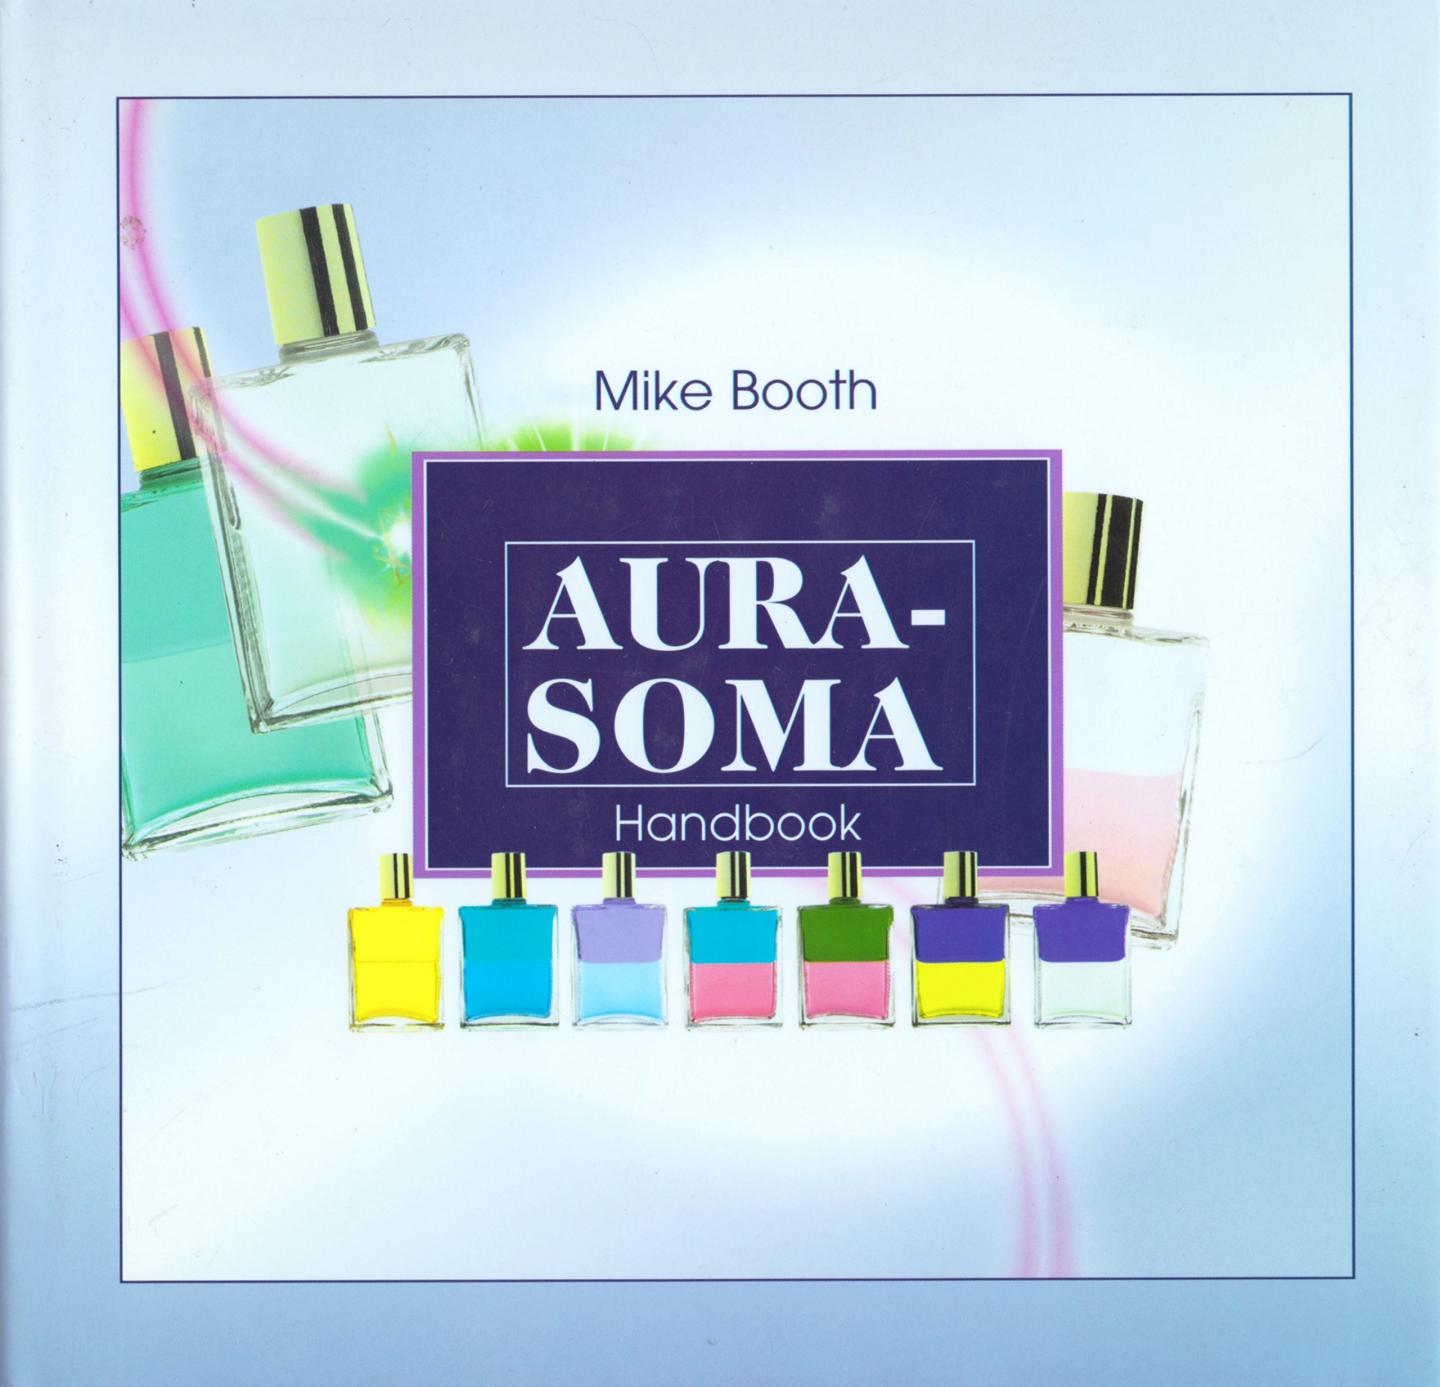 Booth, Mike - Aura-soma handbook